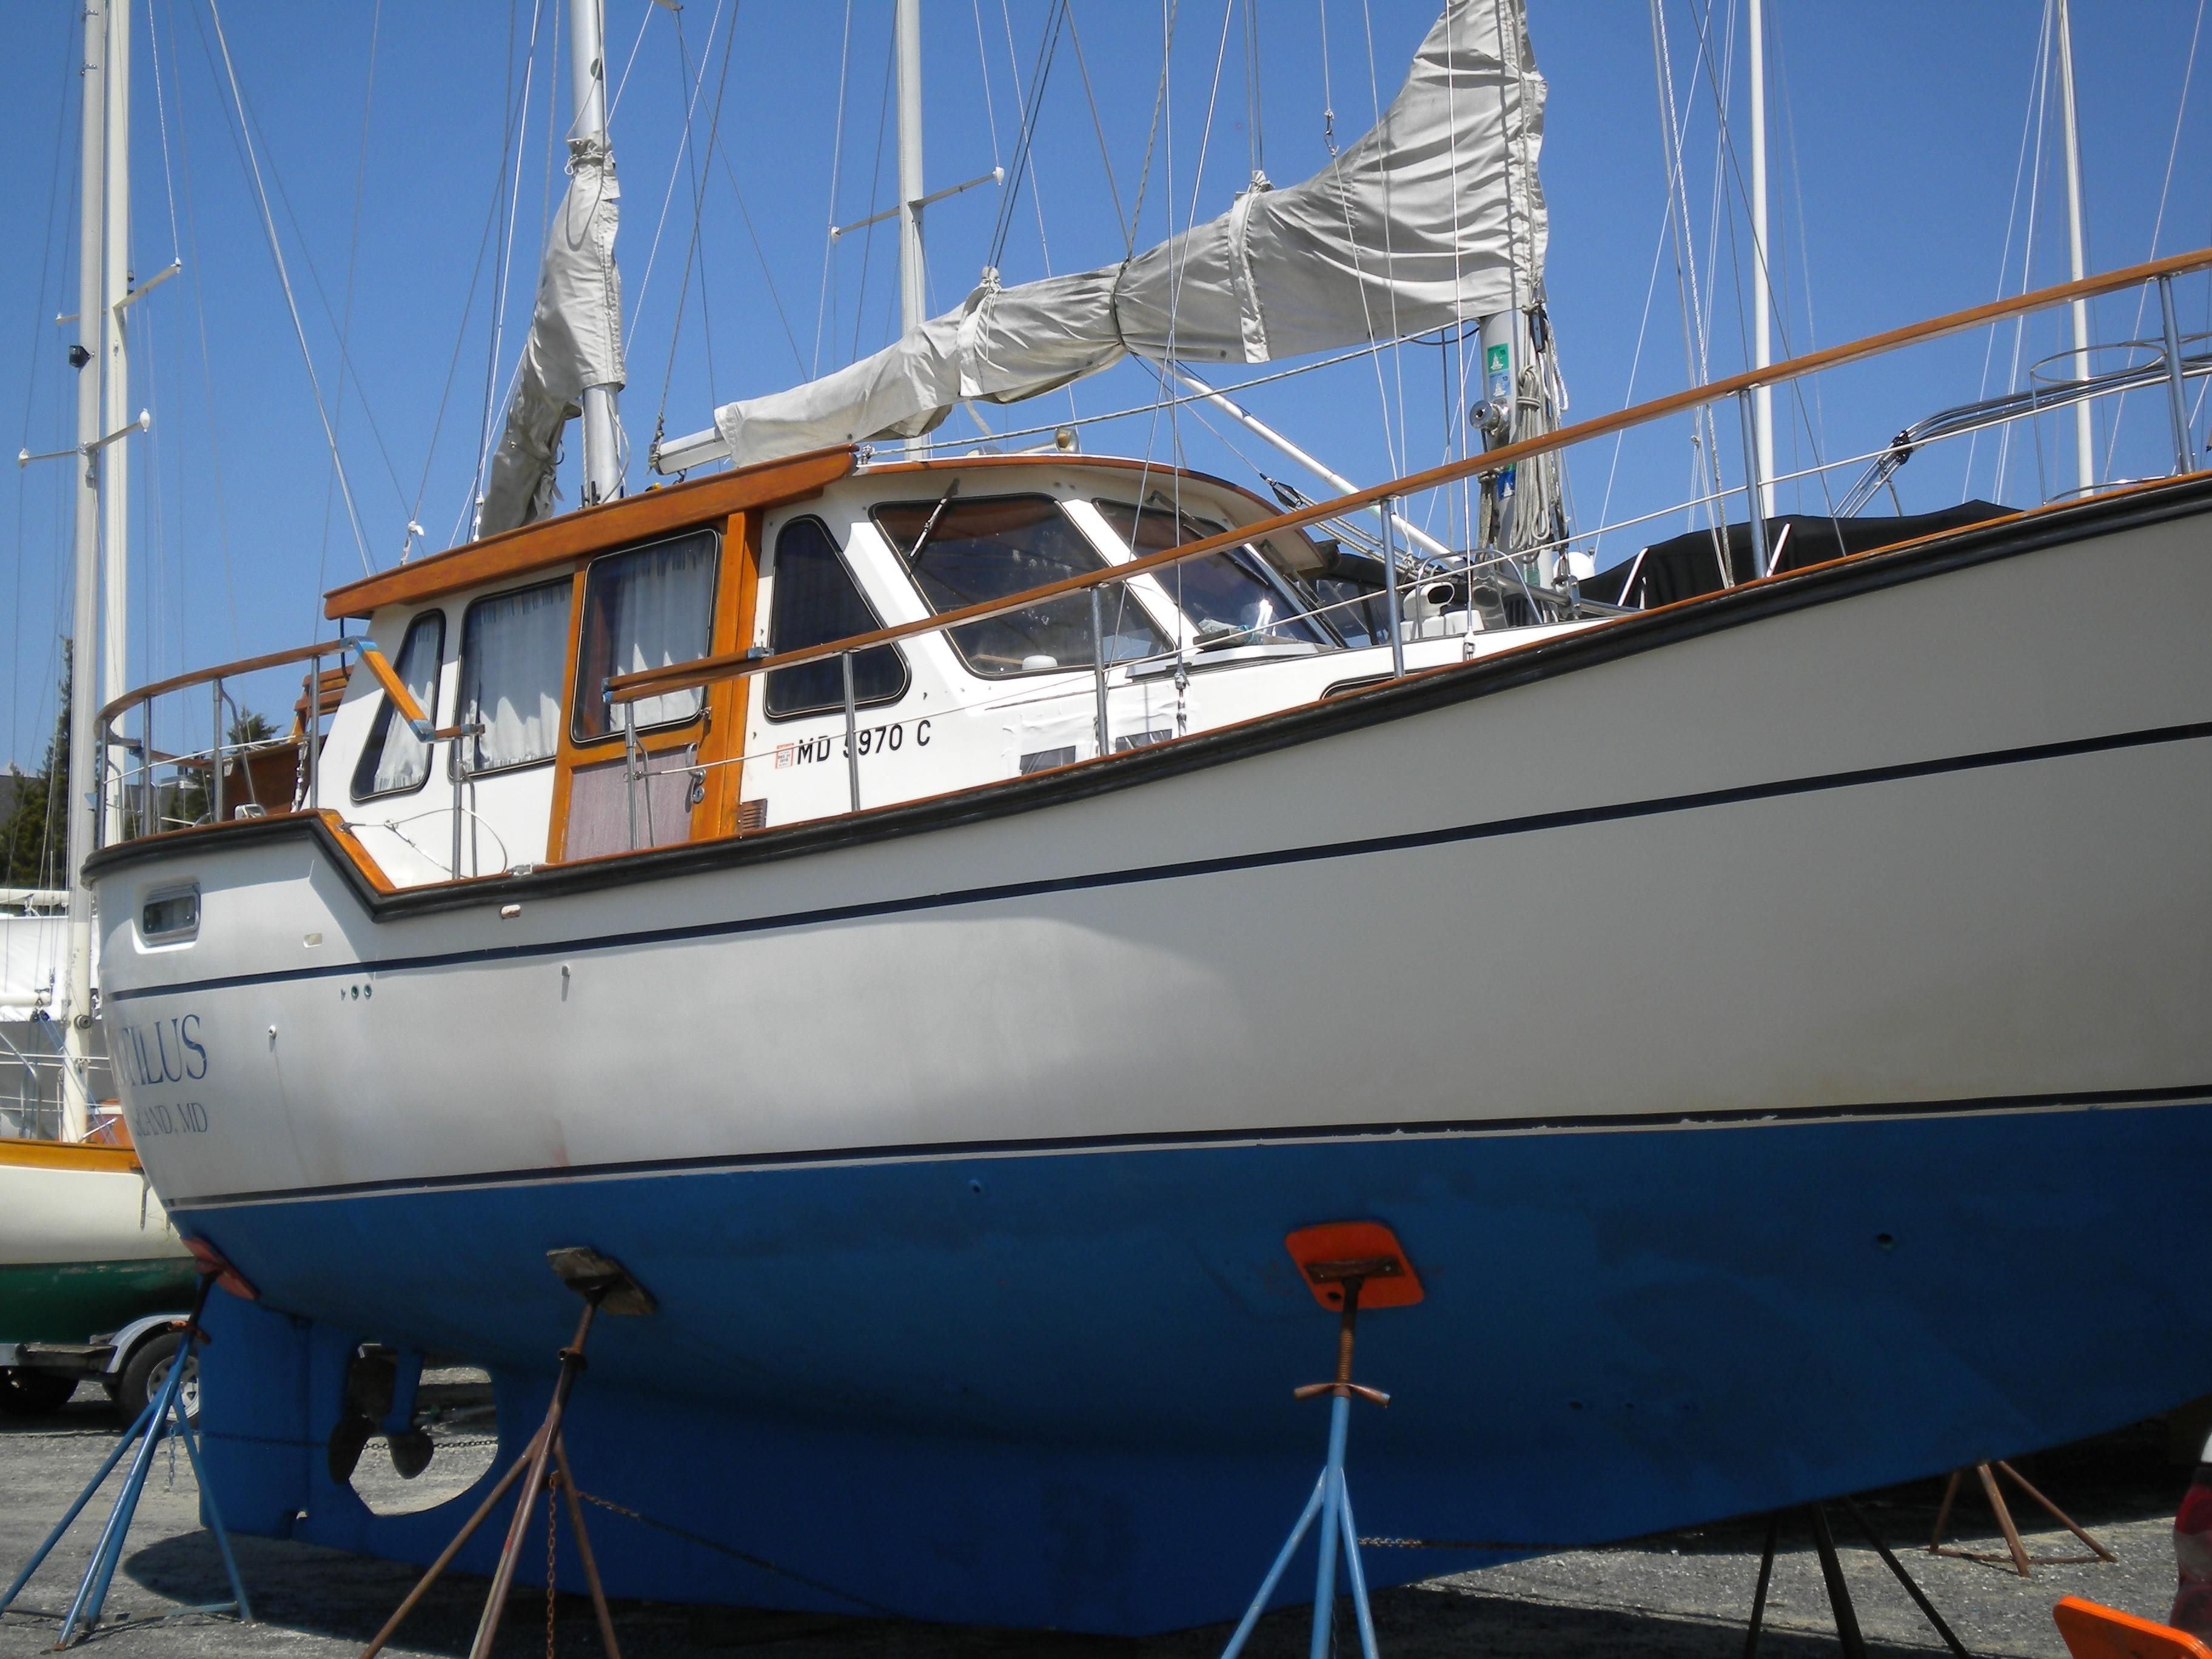 motorsailer yachts for sale uk